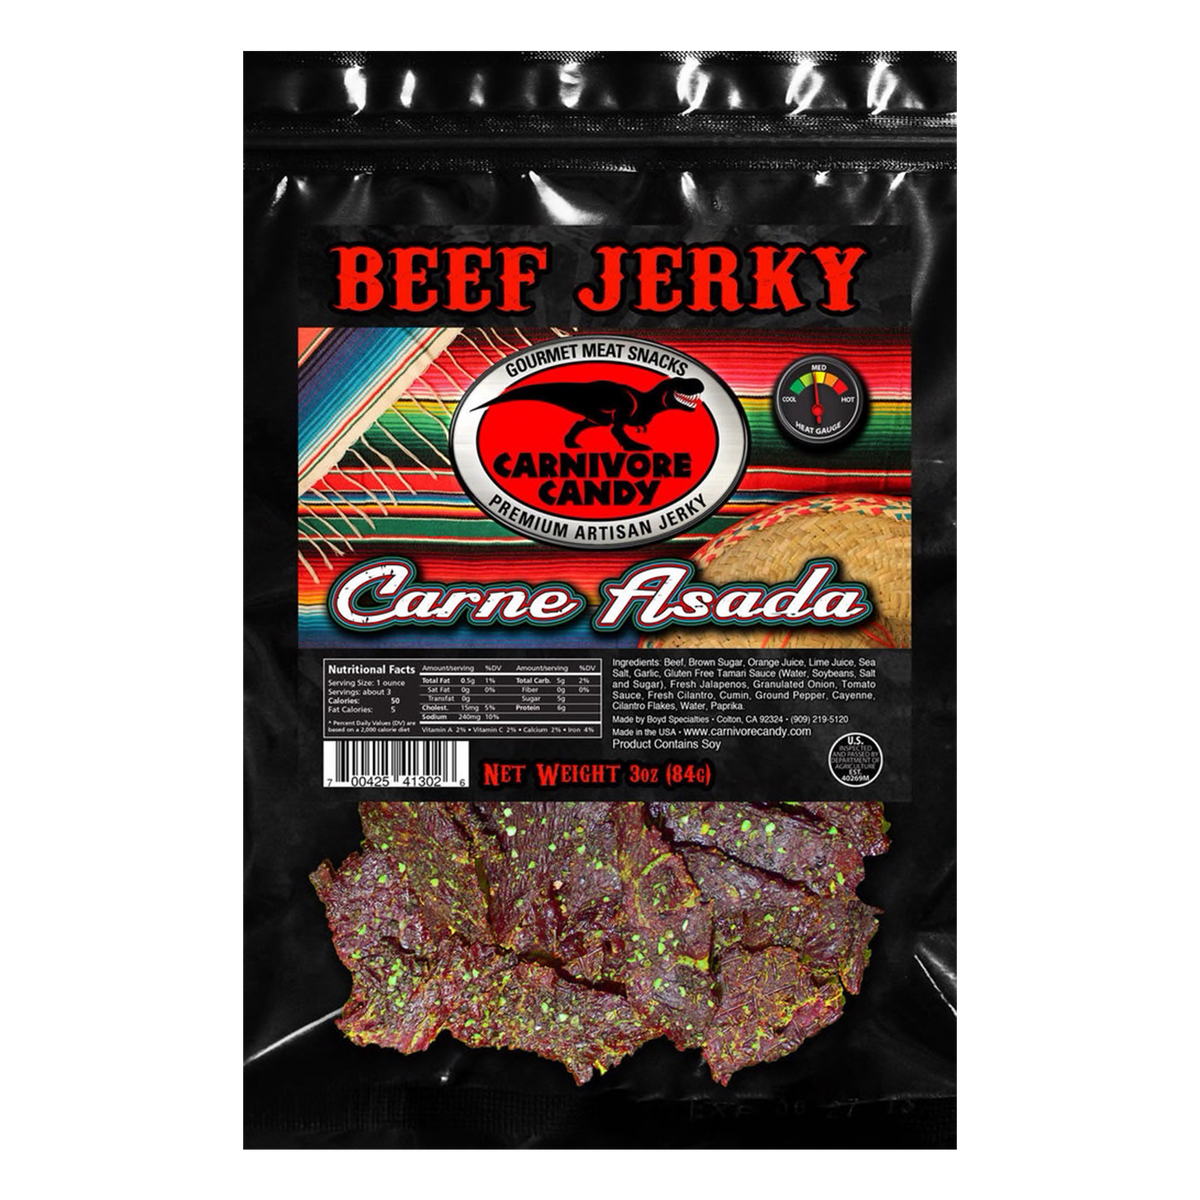 Carnivore Candy Carne Asada Beef Jerky